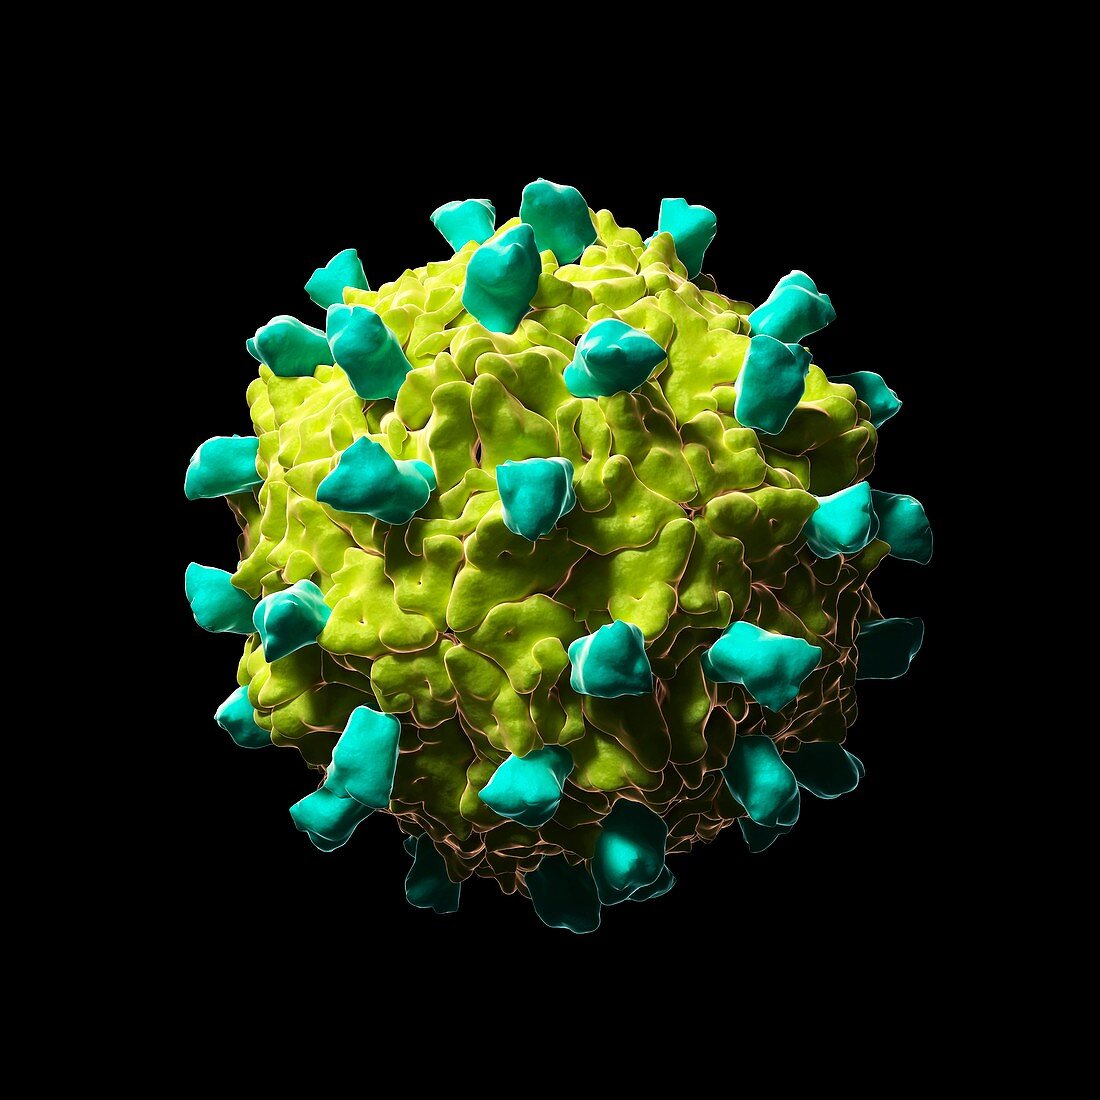 Coxsackie B3 virus particle,artwork